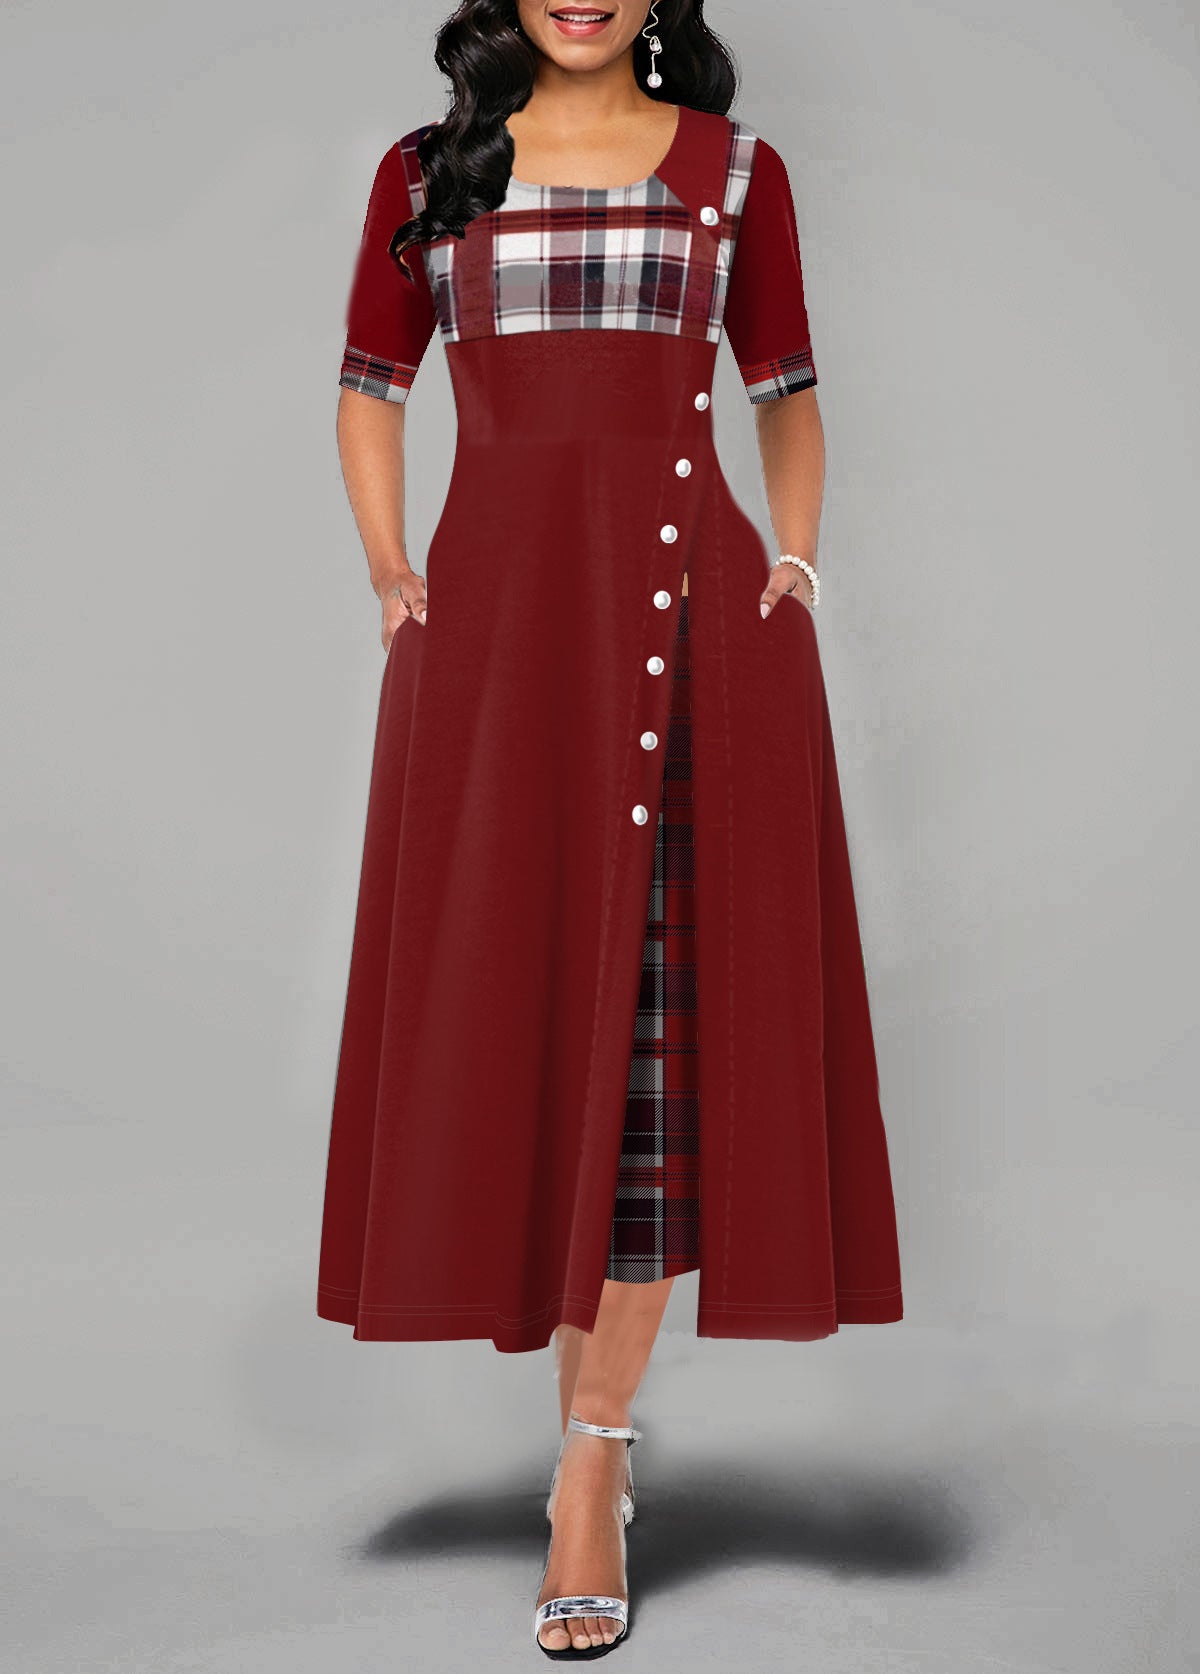 Summetrica Summer Skirt Round Neck Color Color Medive Abito lungo irregolare